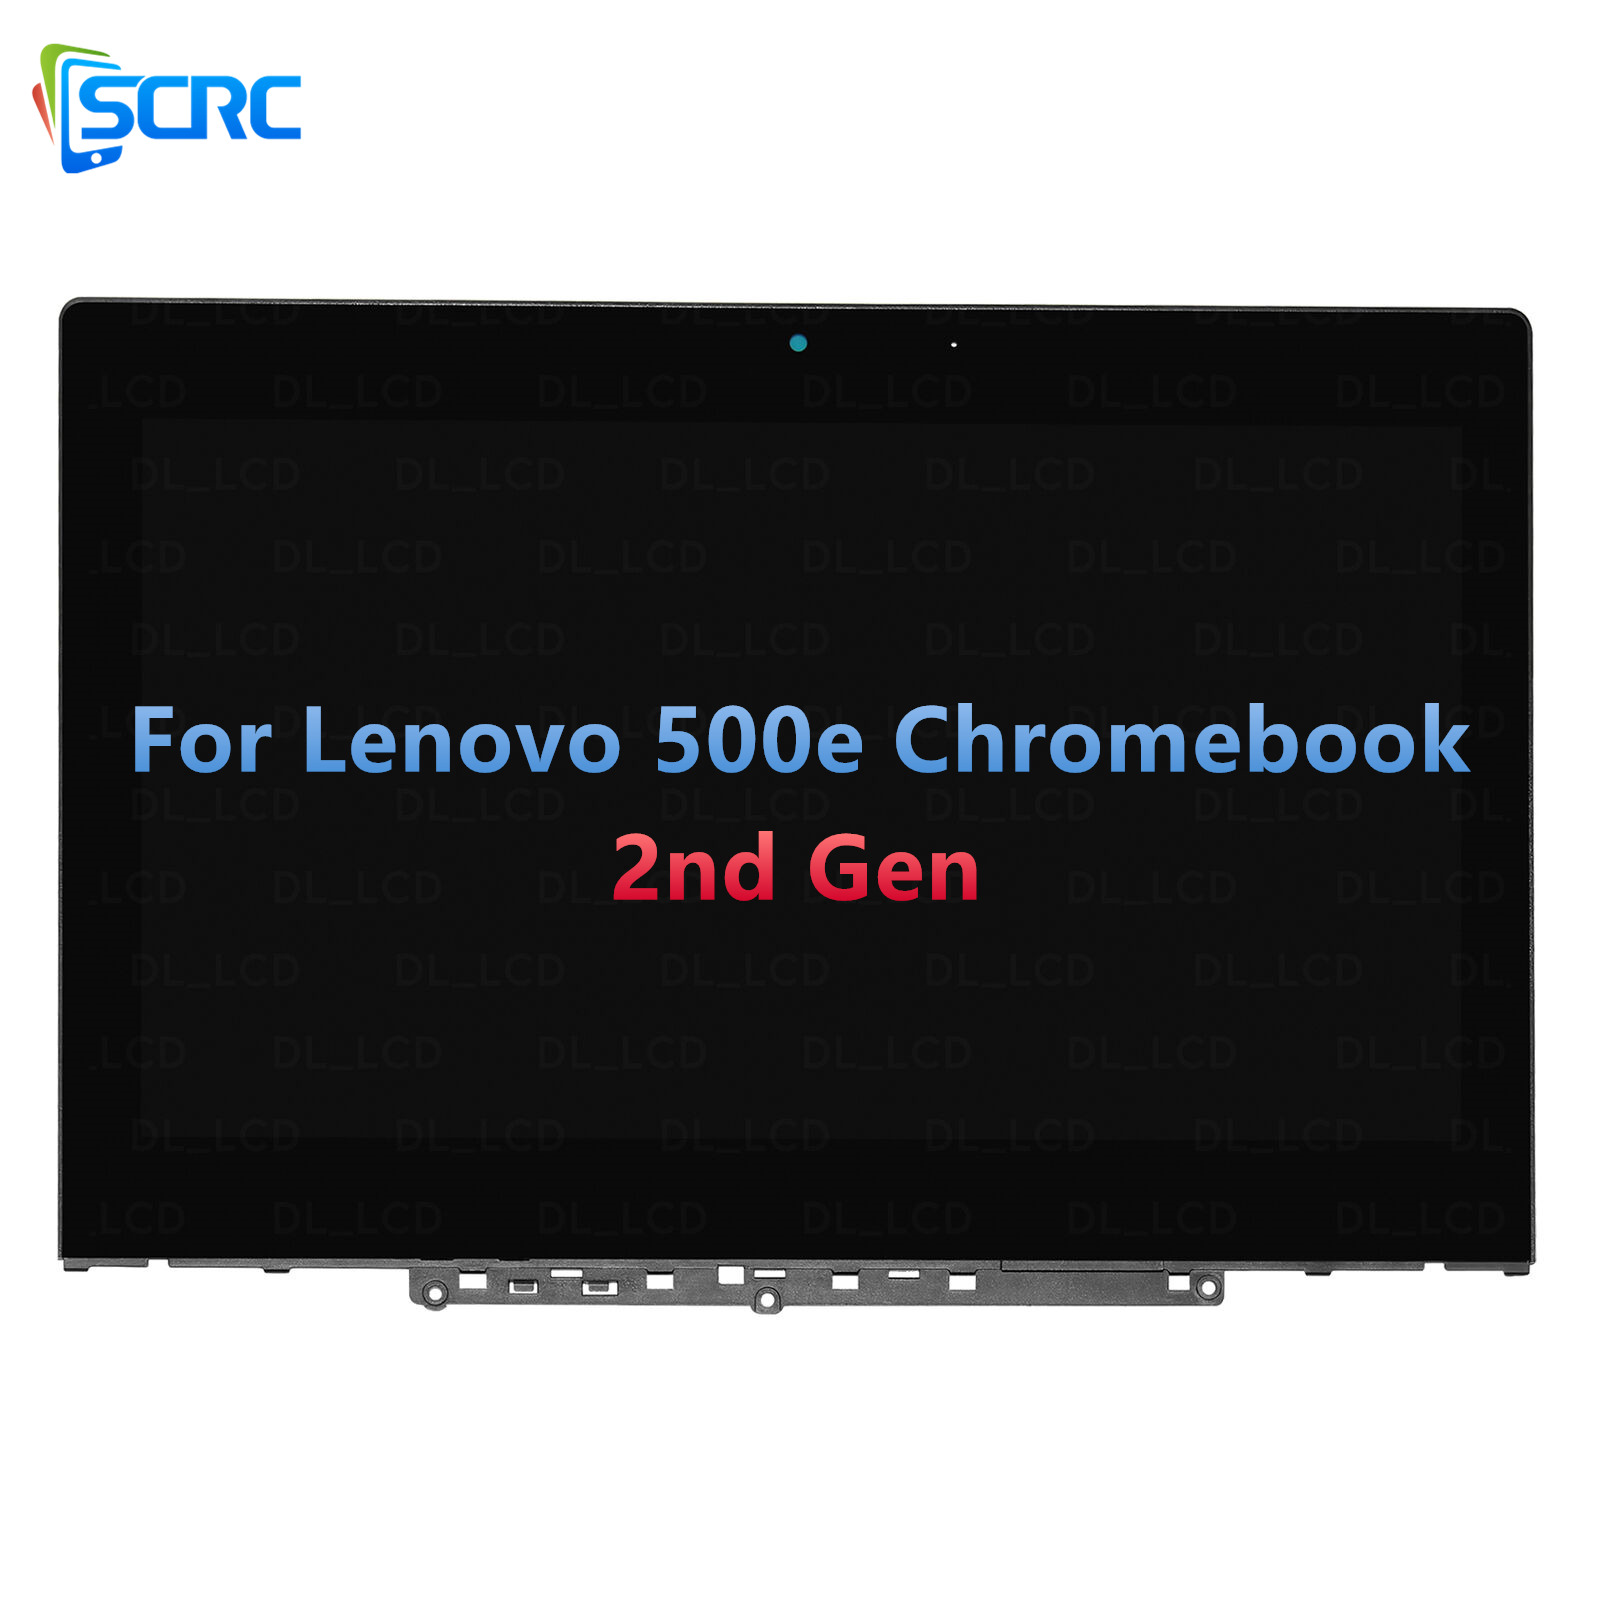 Lenovo 500e Chromebook 2nd Gen-এর জন্য LCD টাচ স্ক্রিন প্রতিস্থাপন